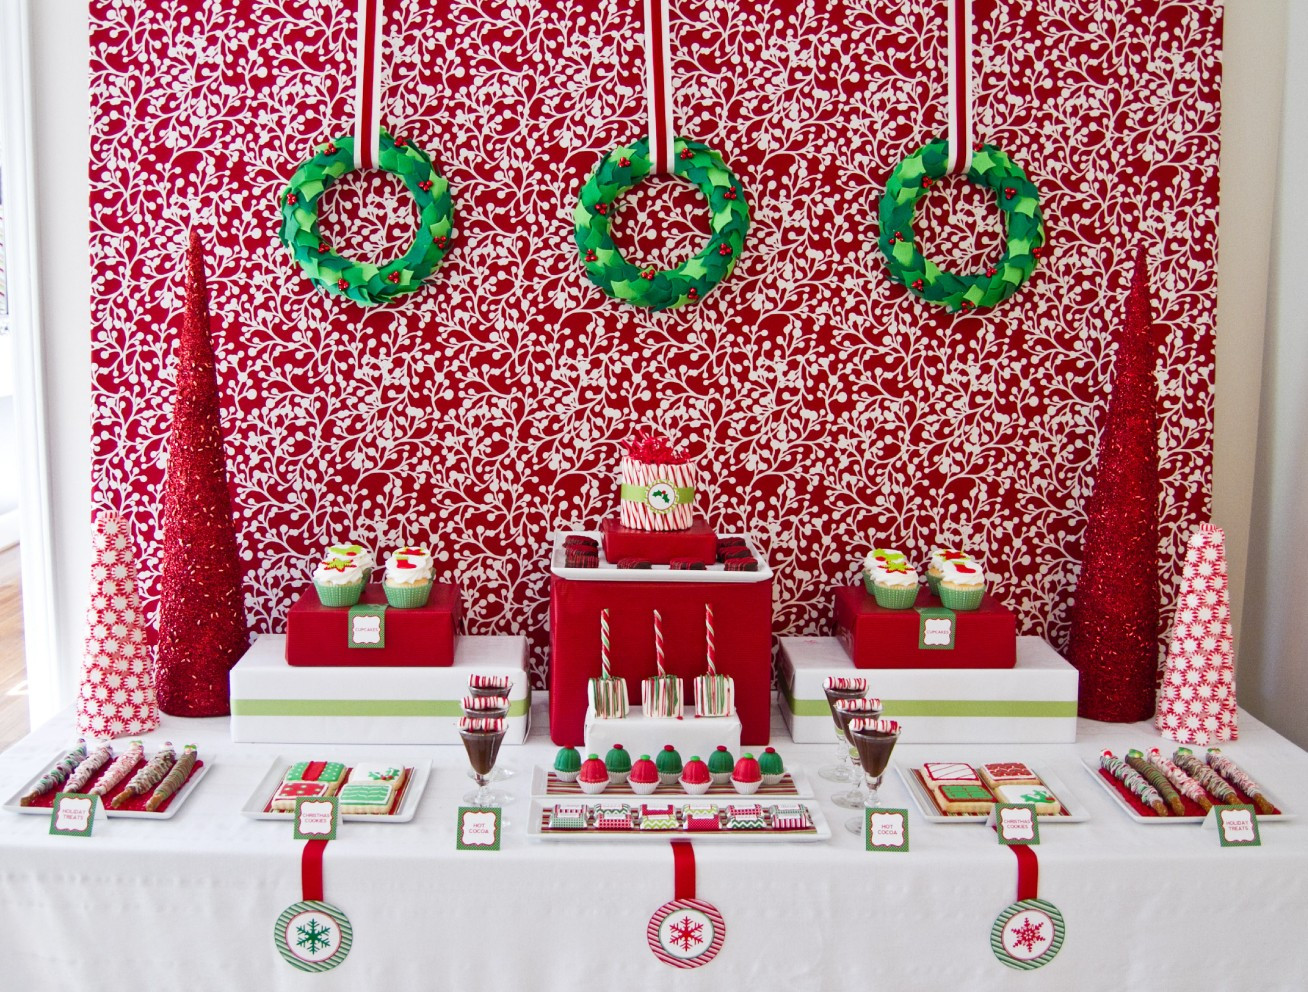 Christmas Party Table Decoration Ideas
 MON TRESOR Christmas Tables & Inspirations